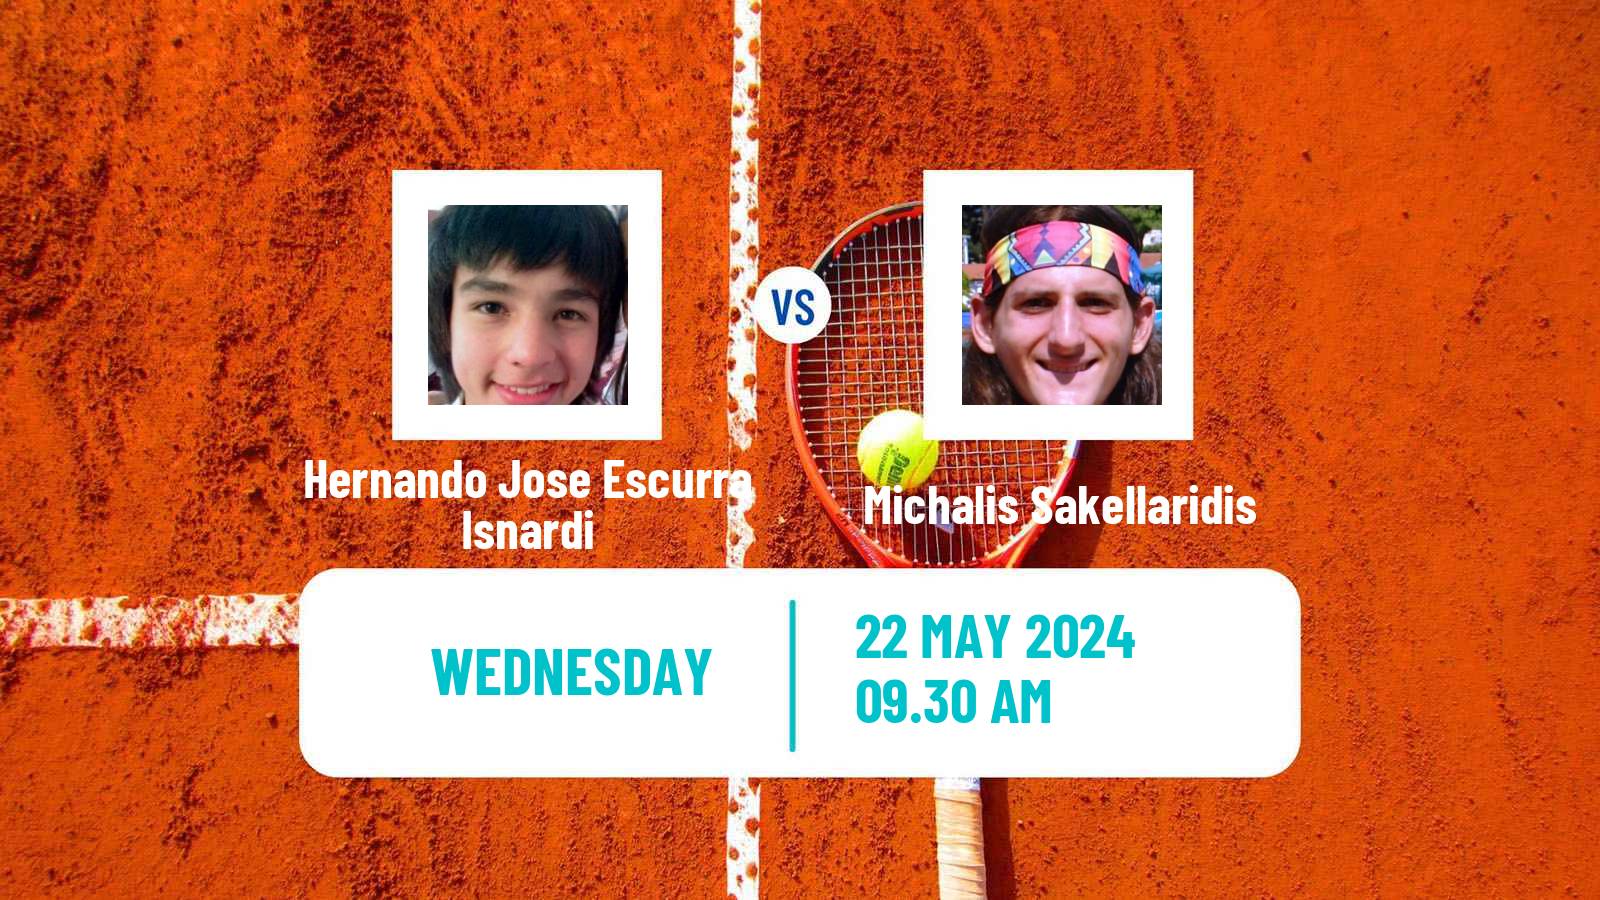 Tennis ITF M15 Brcko Men 2024 Hernando Jose Escurra Isnardi - Michalis Sakellaridis